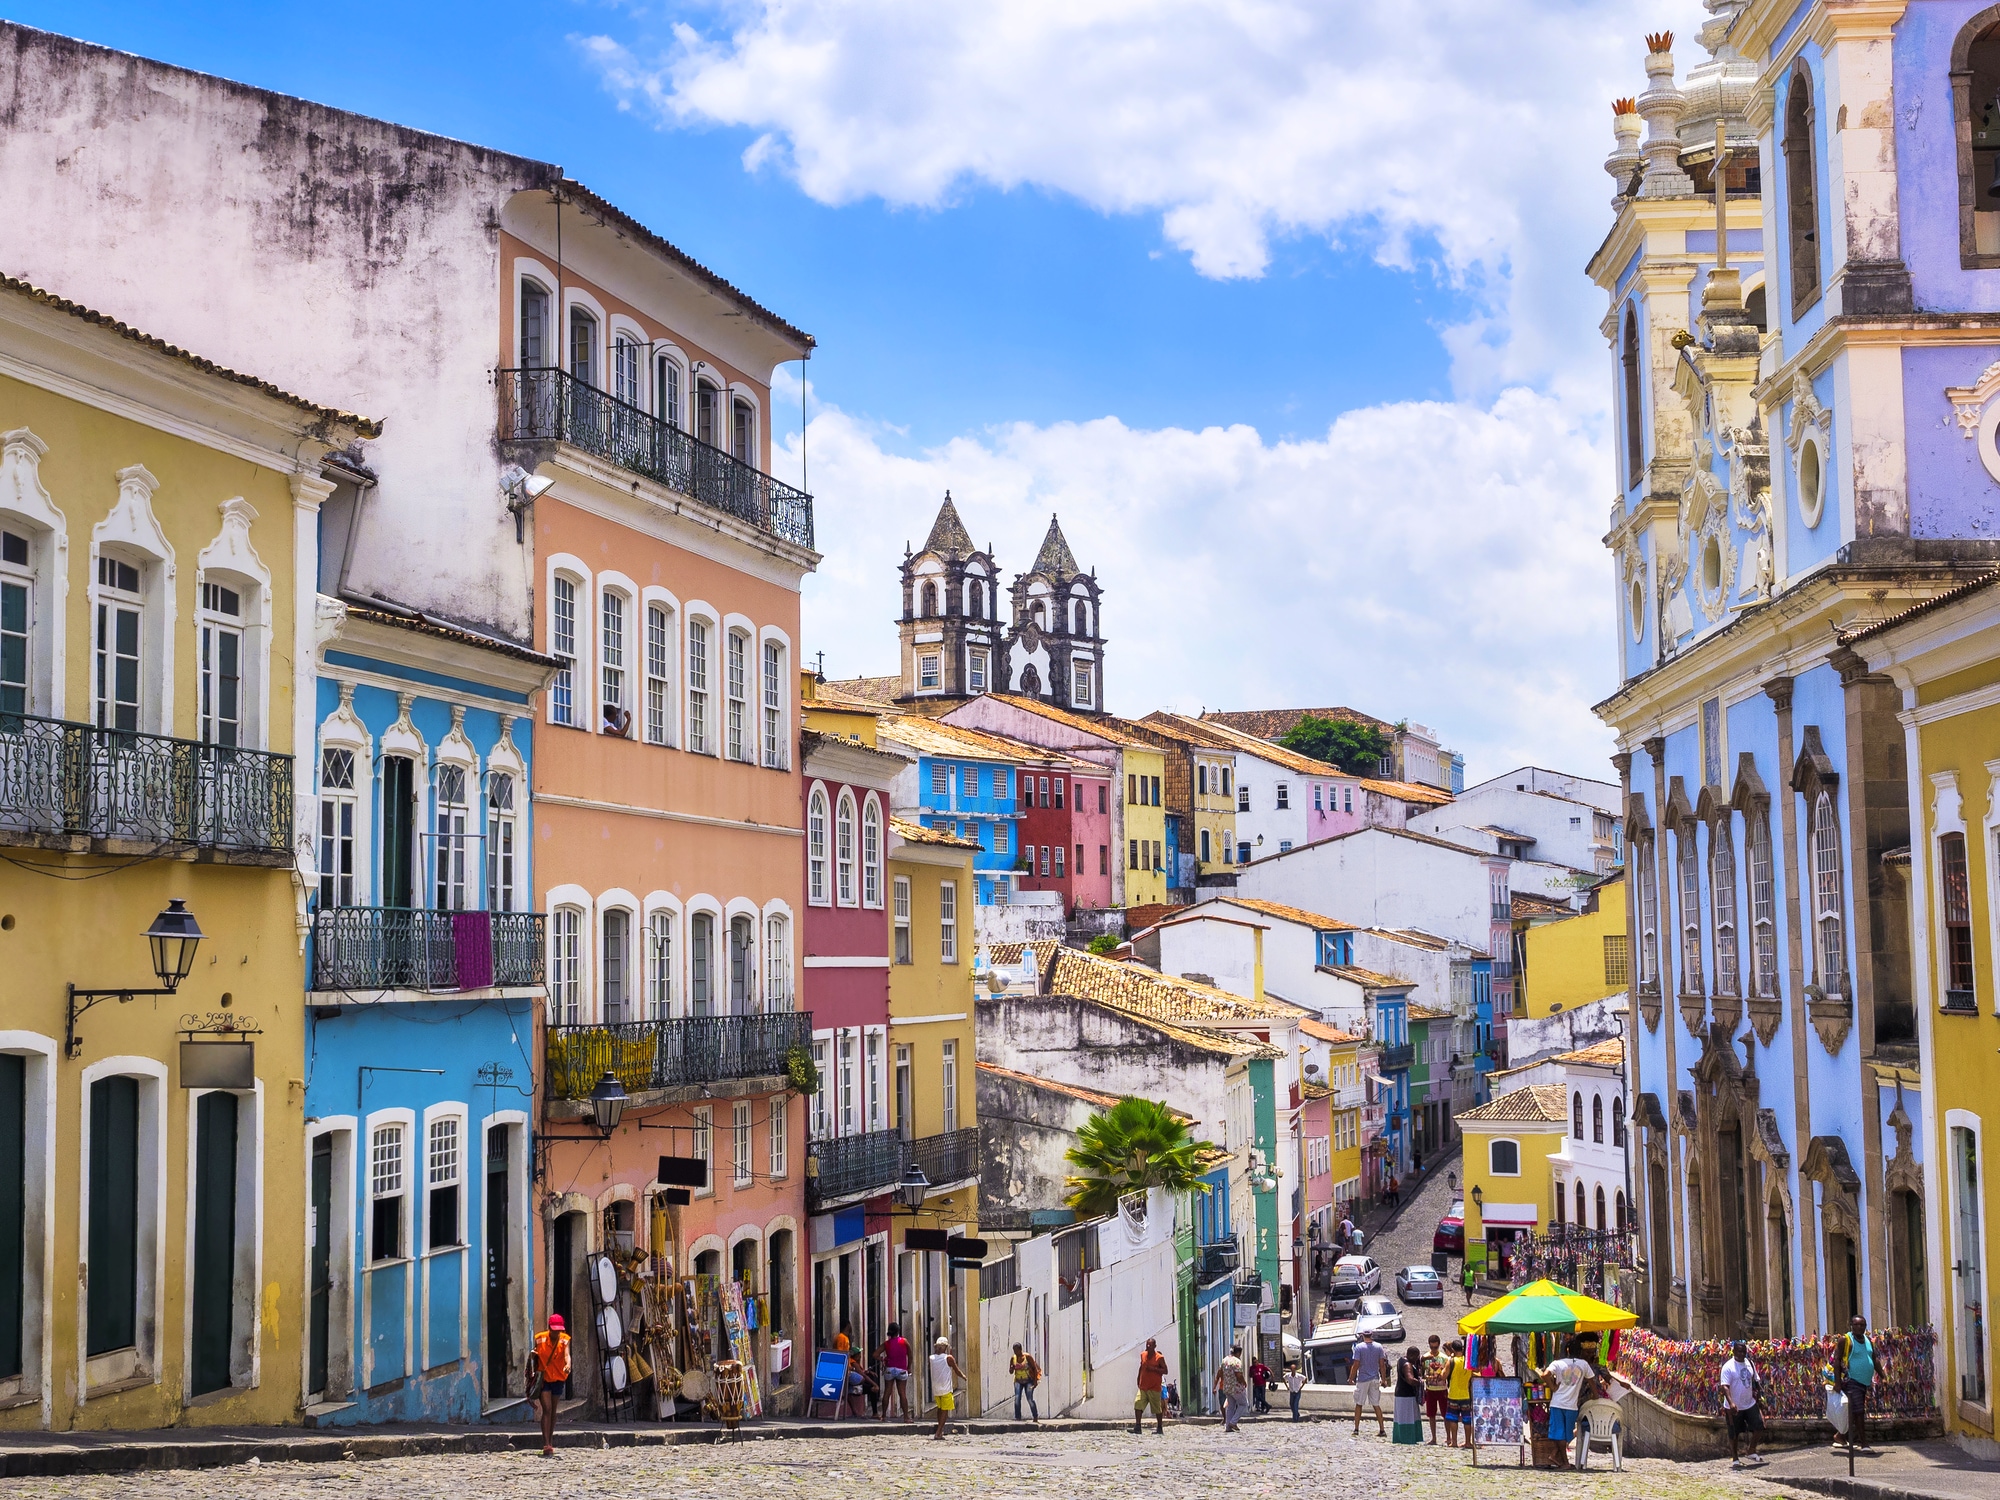 Rio et Salvador de Bahia, un véritable héritage culturel